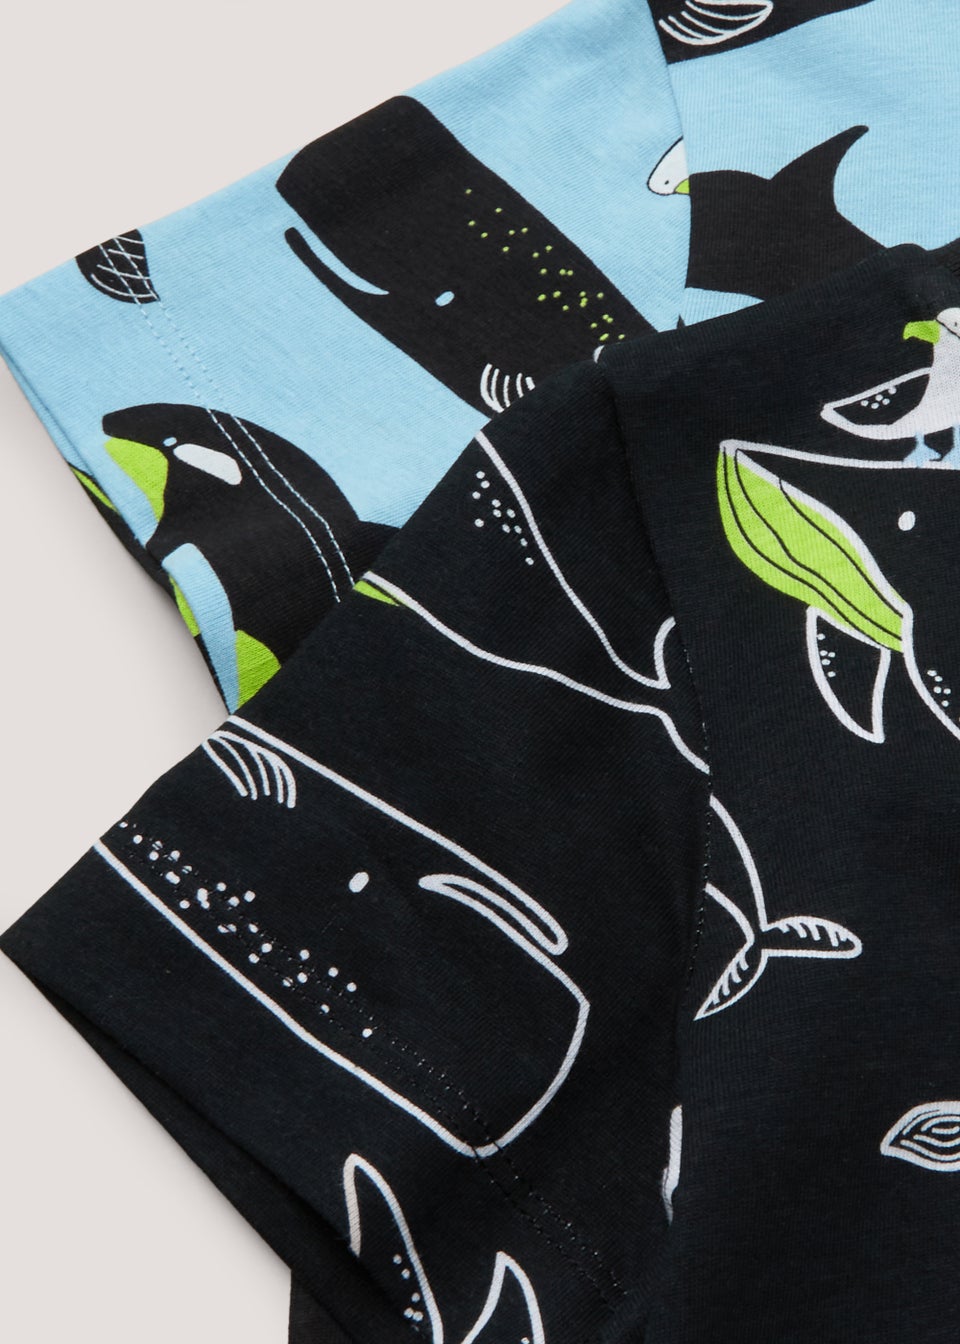 Boys 2 Pack Black Whale Print Short Pyjama Sets (9mths-5yrs)